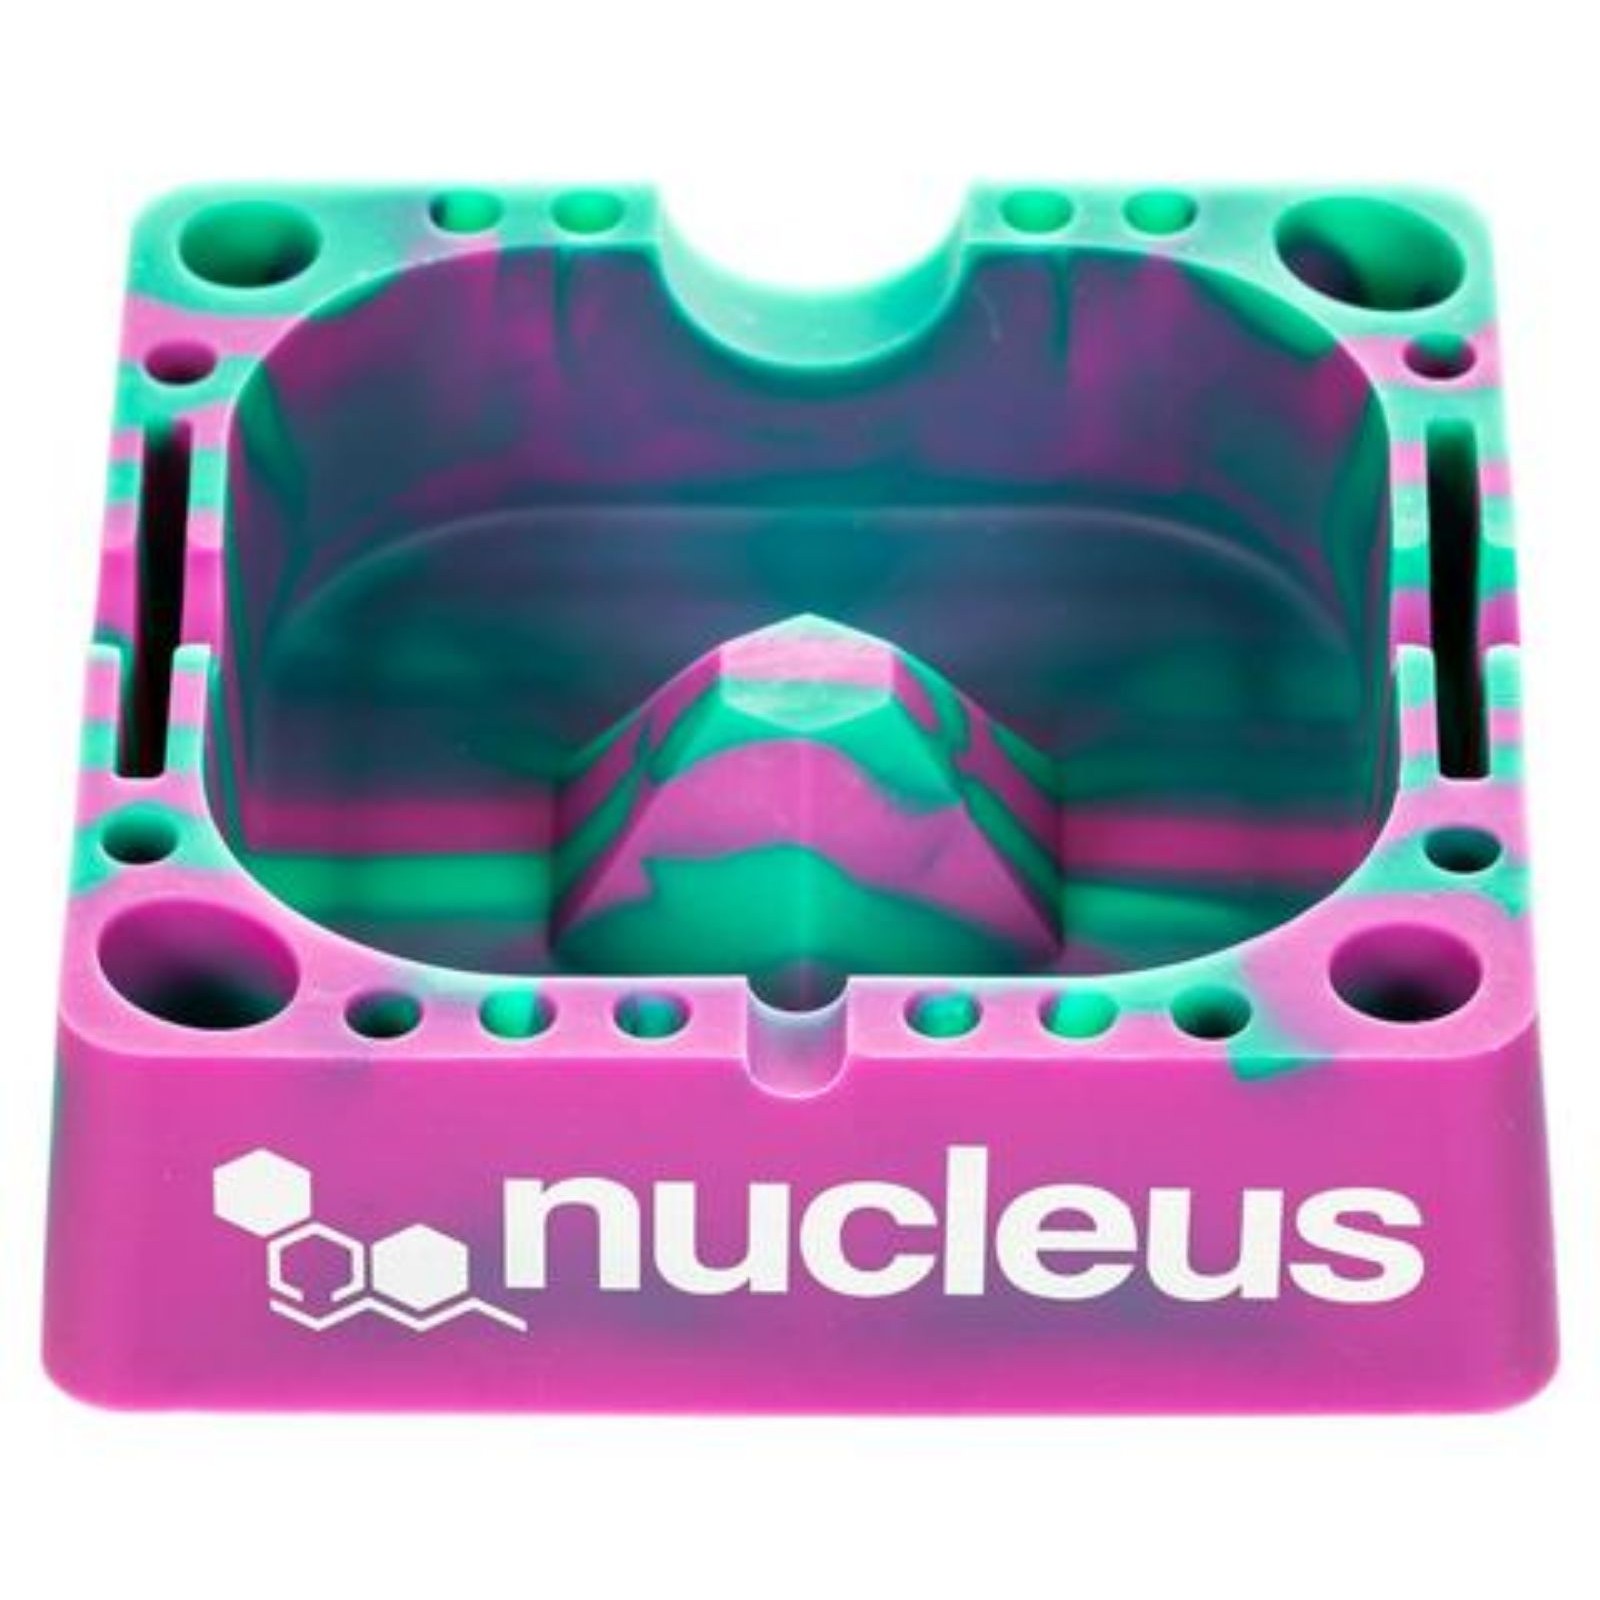 Nucleus' Silicone Ashtray | Leafly